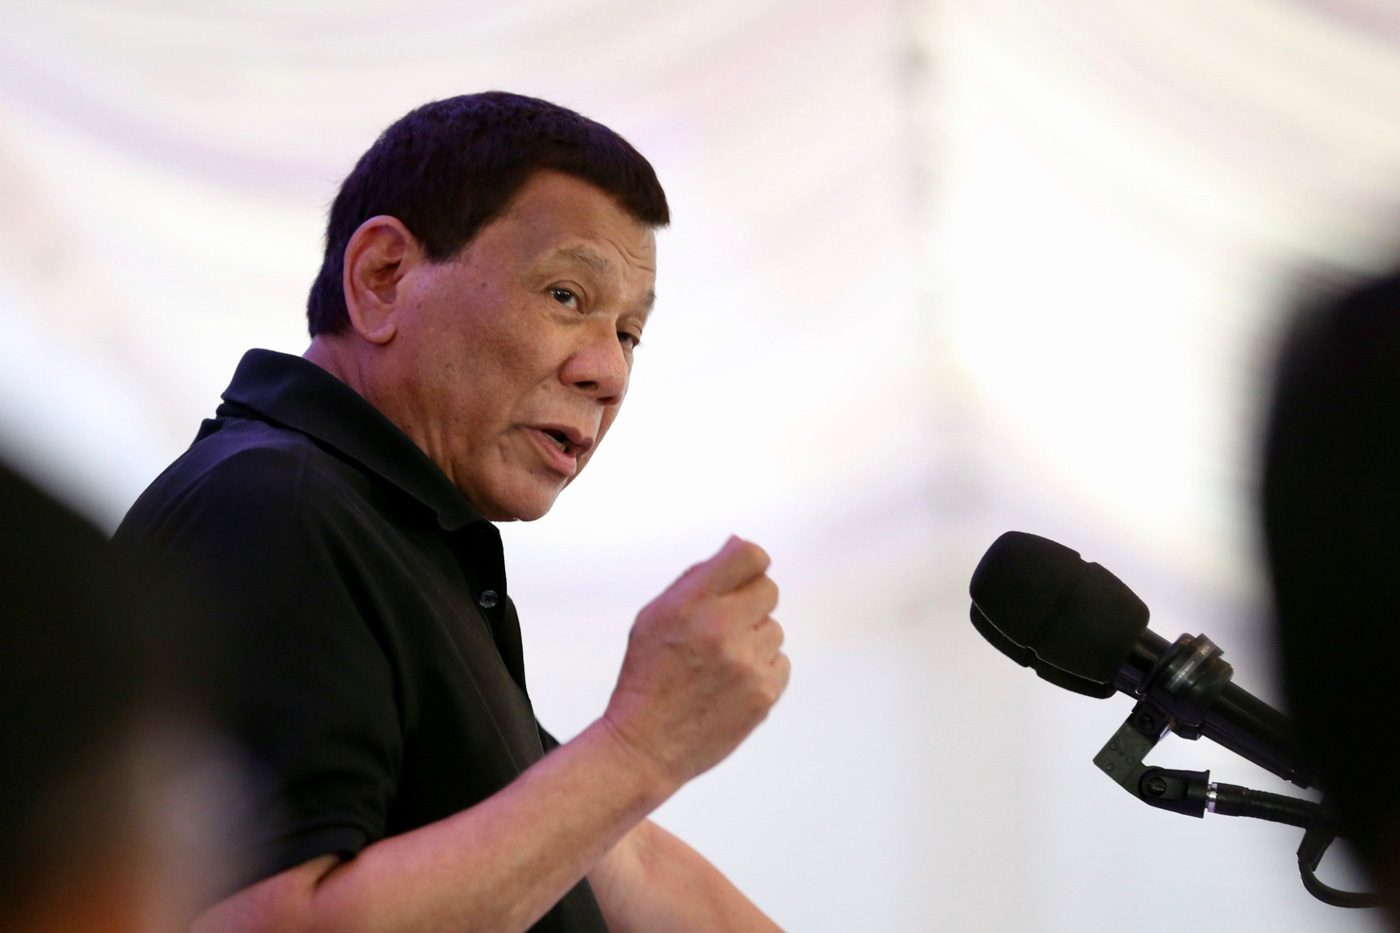 Akhiri ‘perang’ Duterte terhadap pembela hak asasi manusia, kata para pengawas